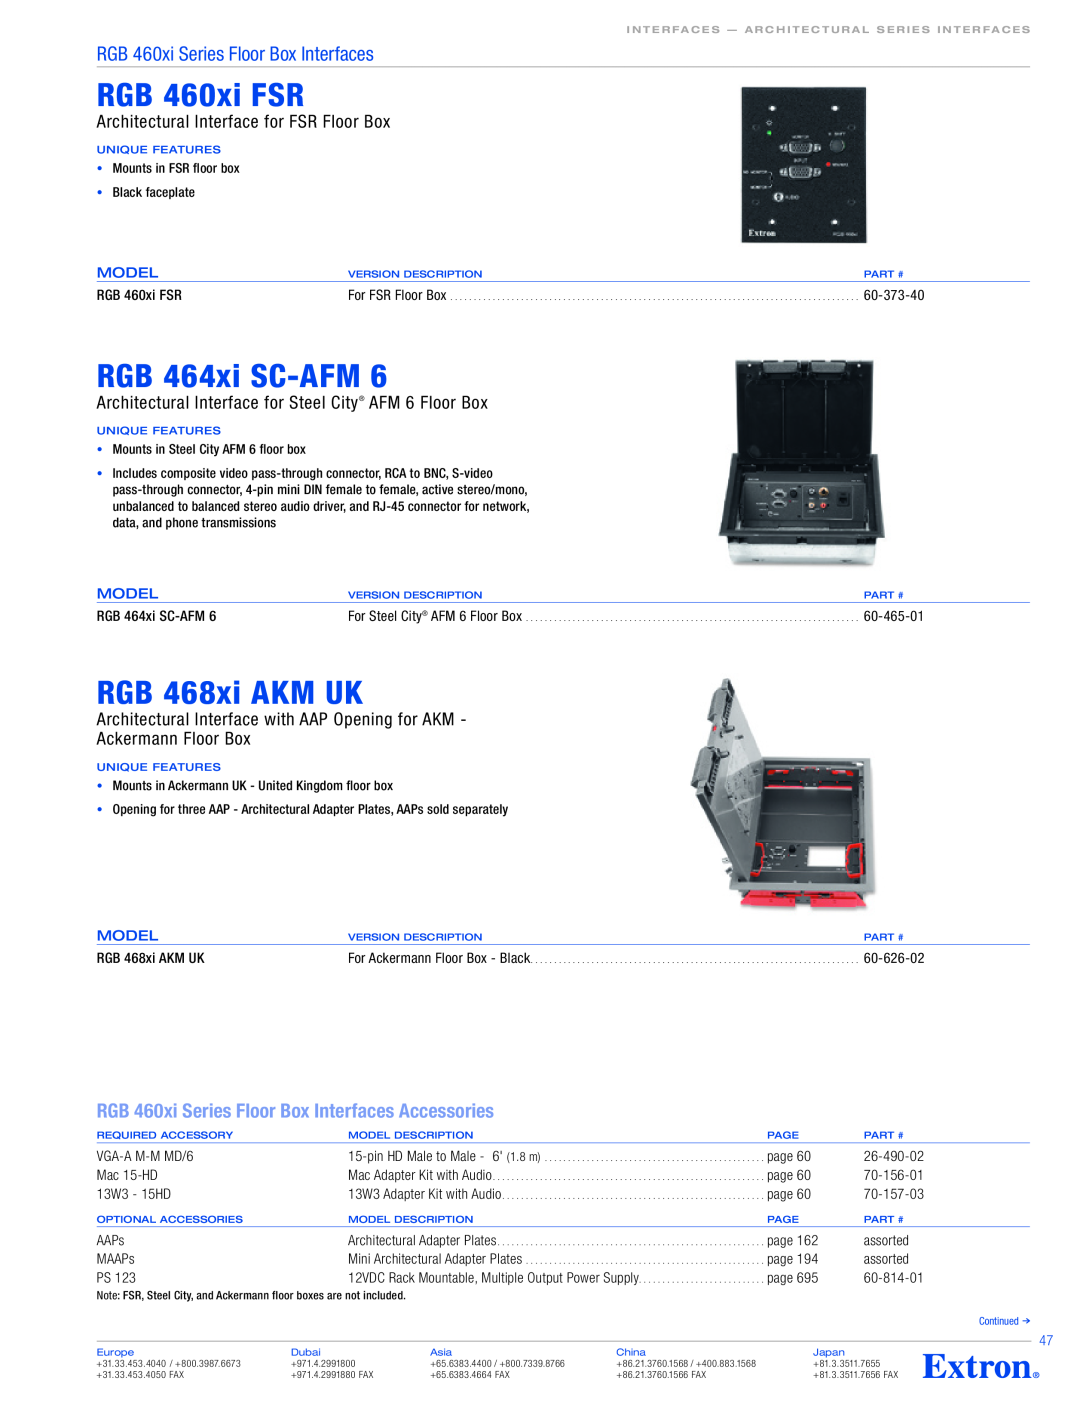 Extron electronic RGB 460xi Series RGB 460xi FSR, RGB 464xi SC-AFM, RGB 468xi AKM UK, Model, 60-373-40, 60-626-02 